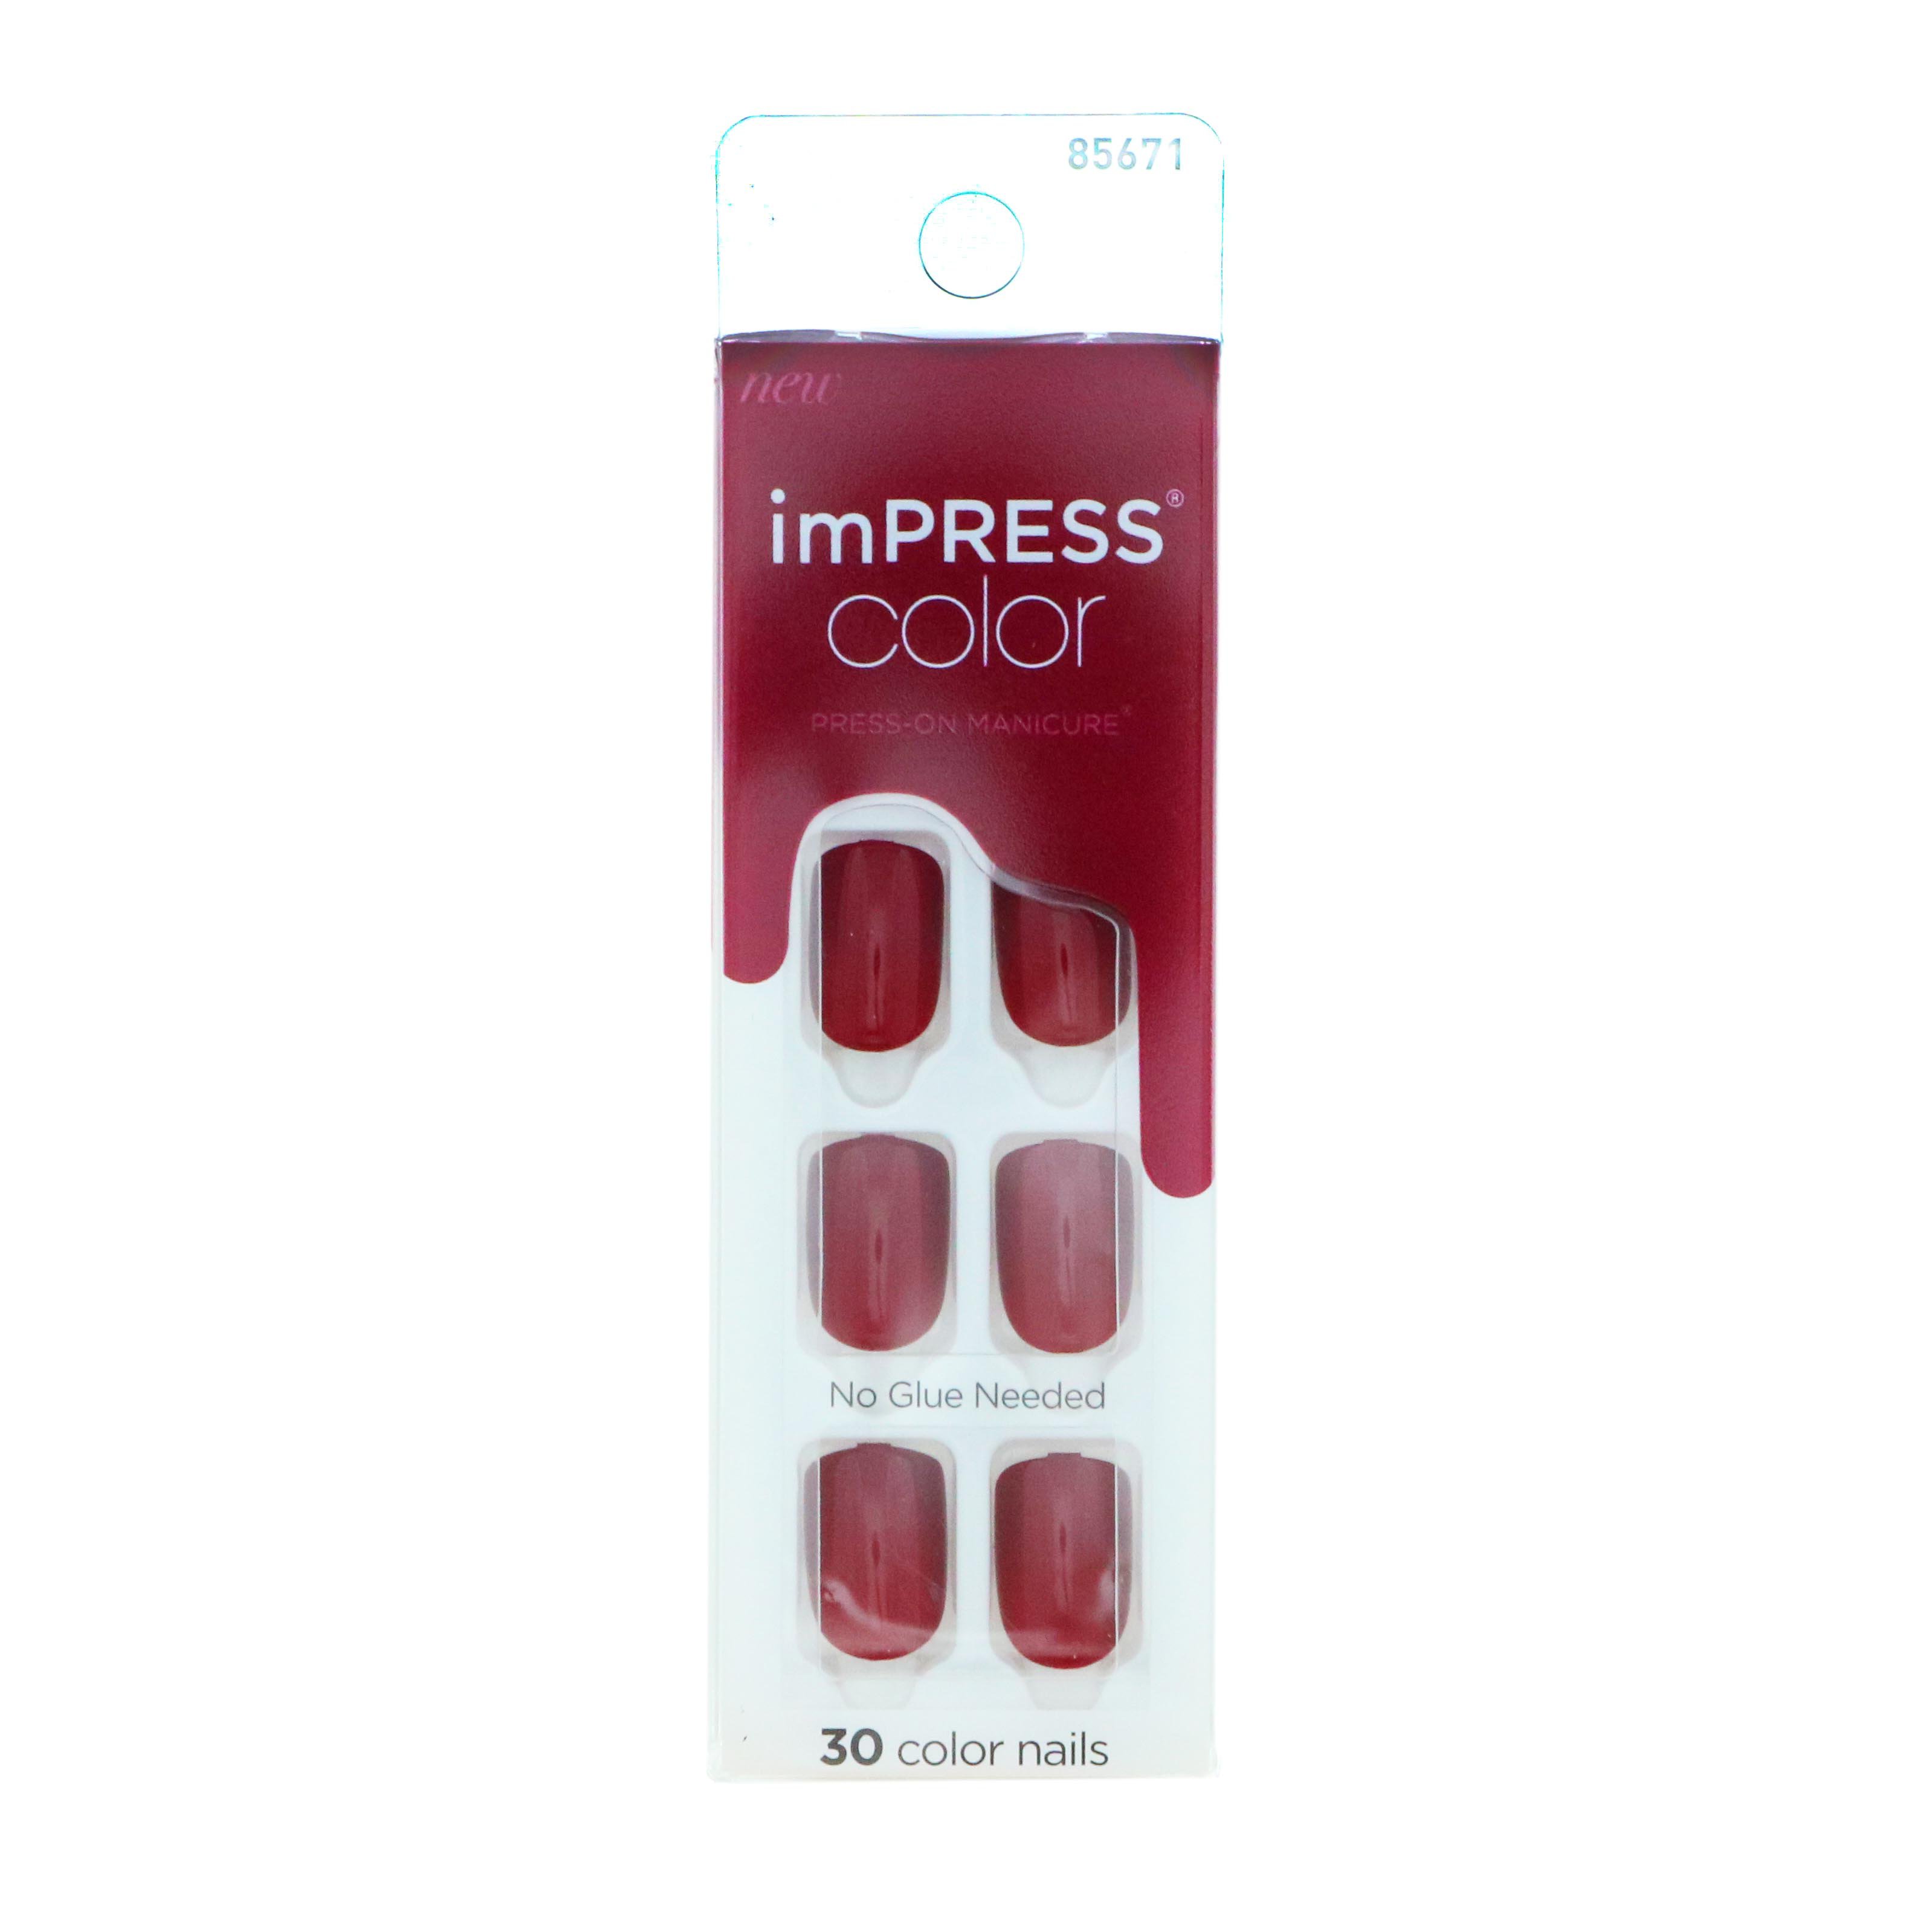 KISS imPRESS Color Press-On Manicure - Red Velvet - Shop Nail Sets at H-E-B